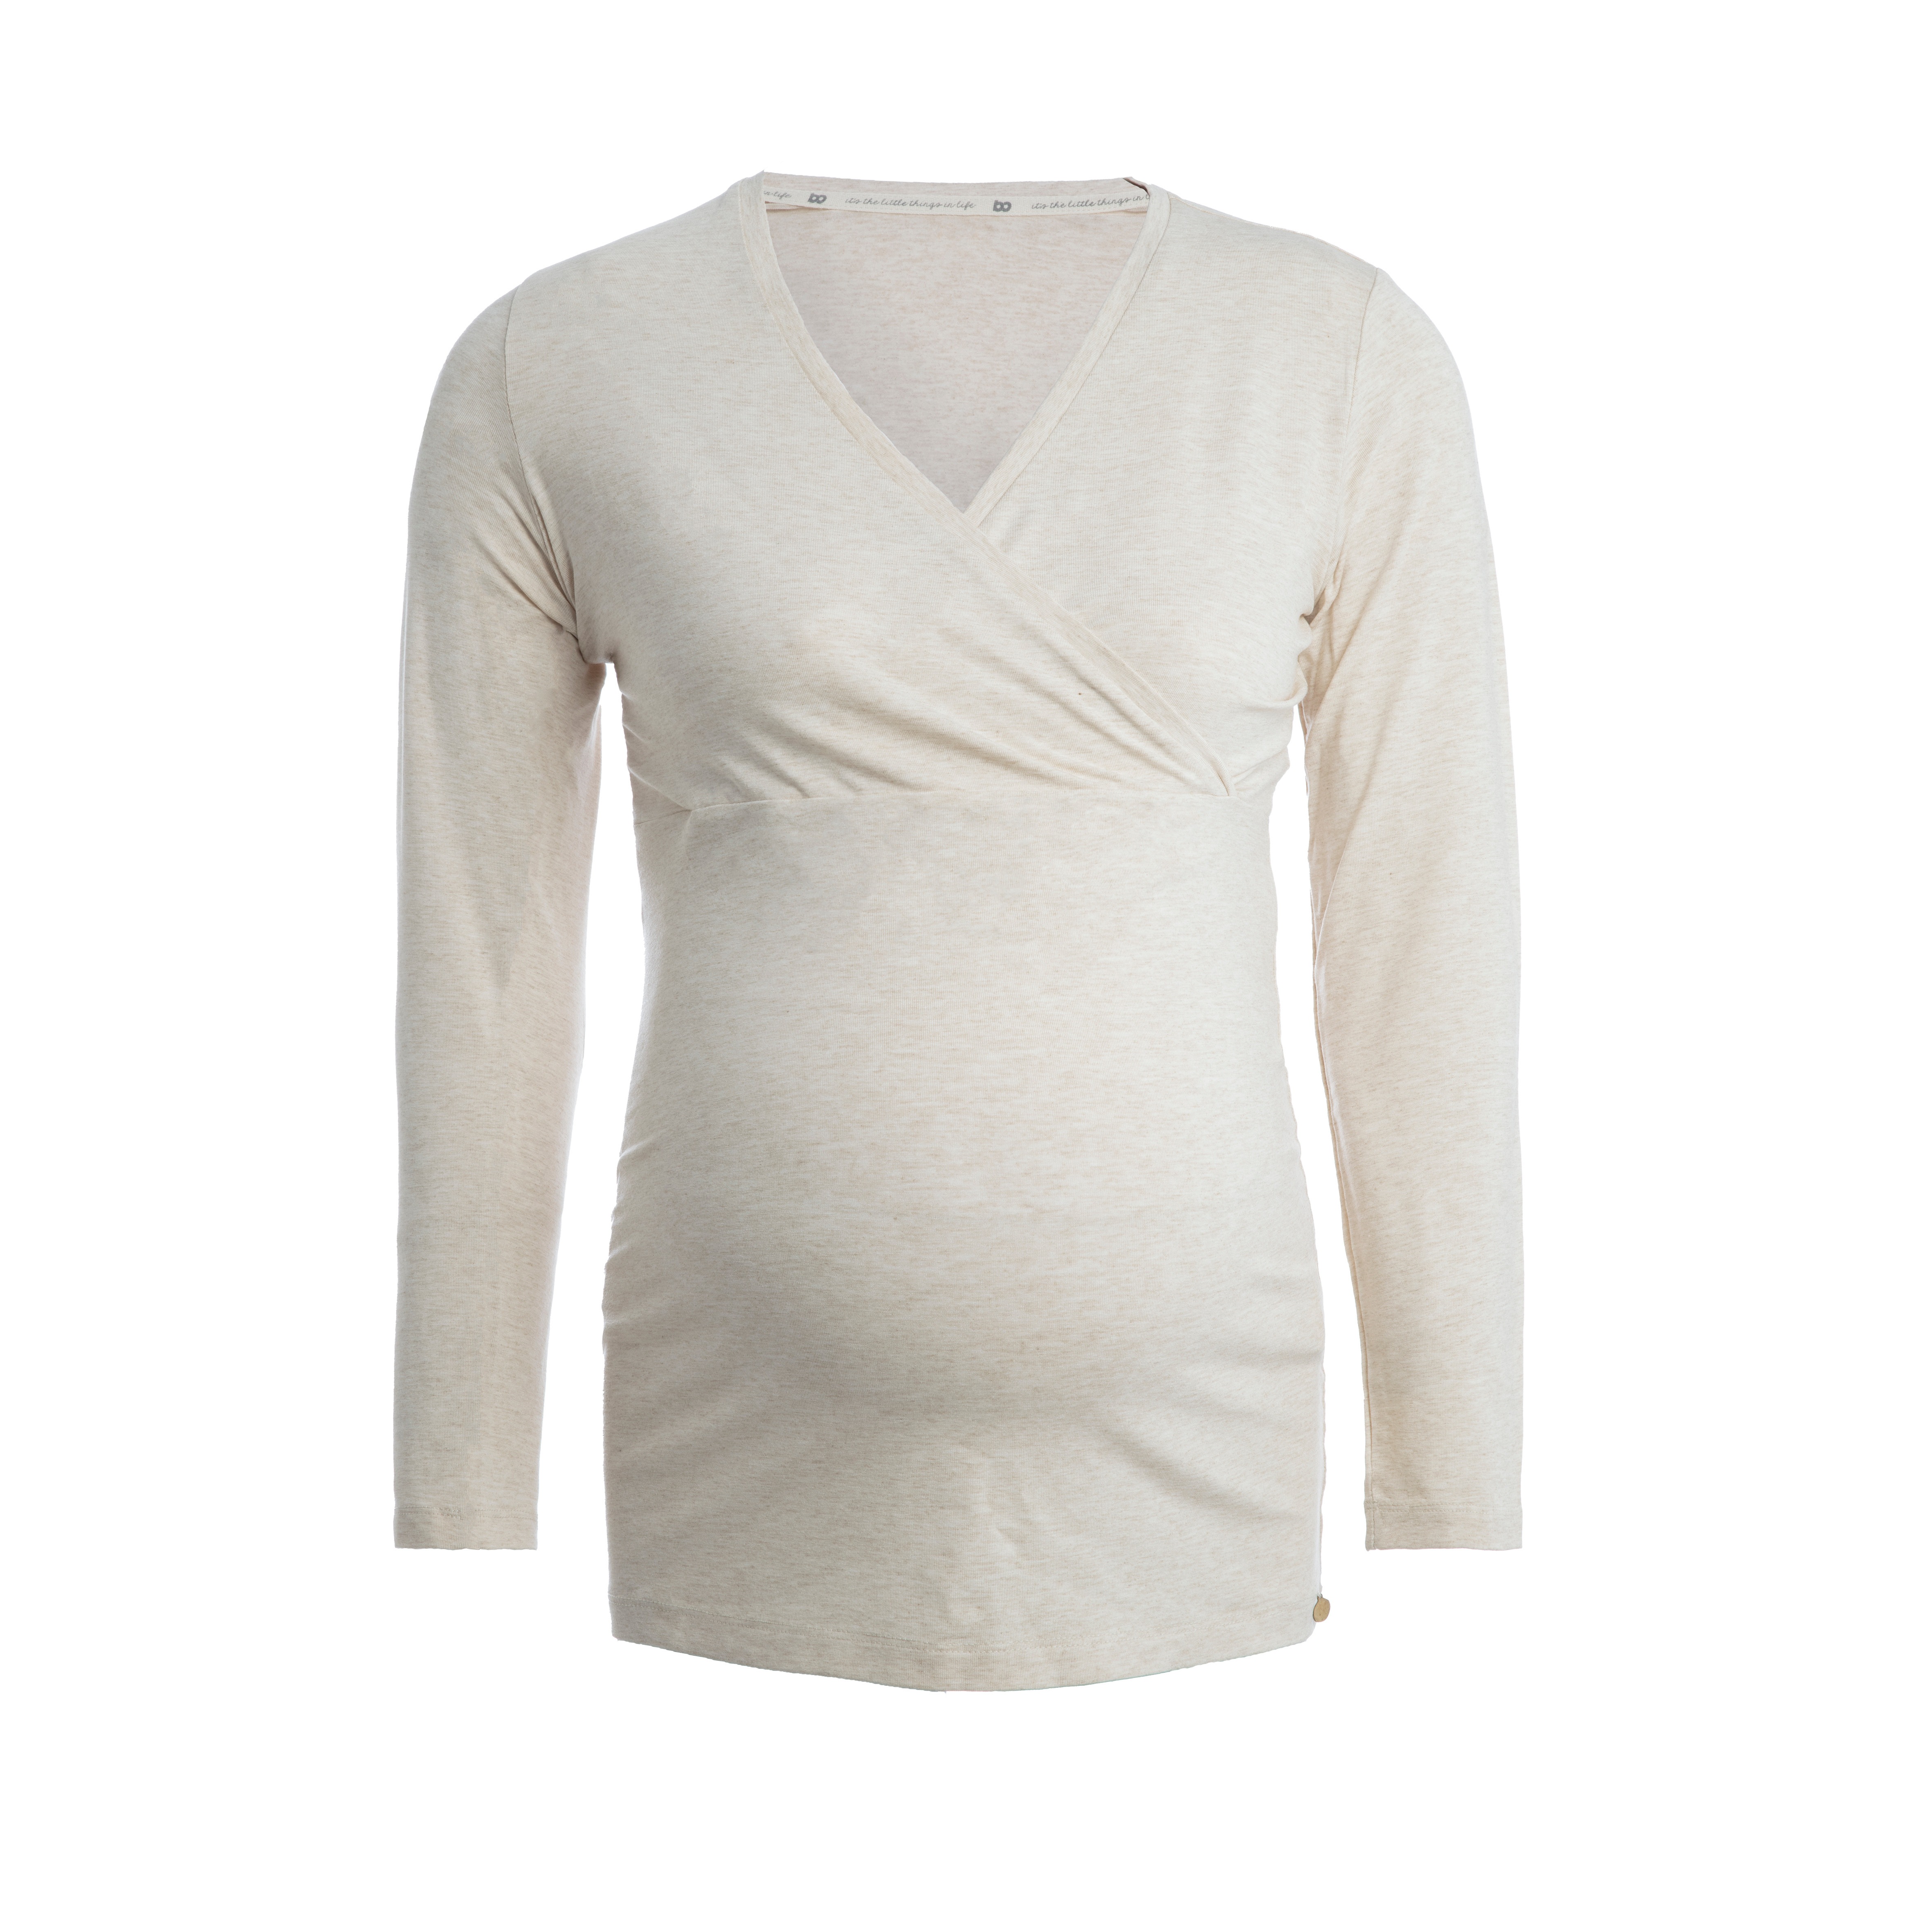 Maternity long sleeve top Glow ecru - M - With nursing function